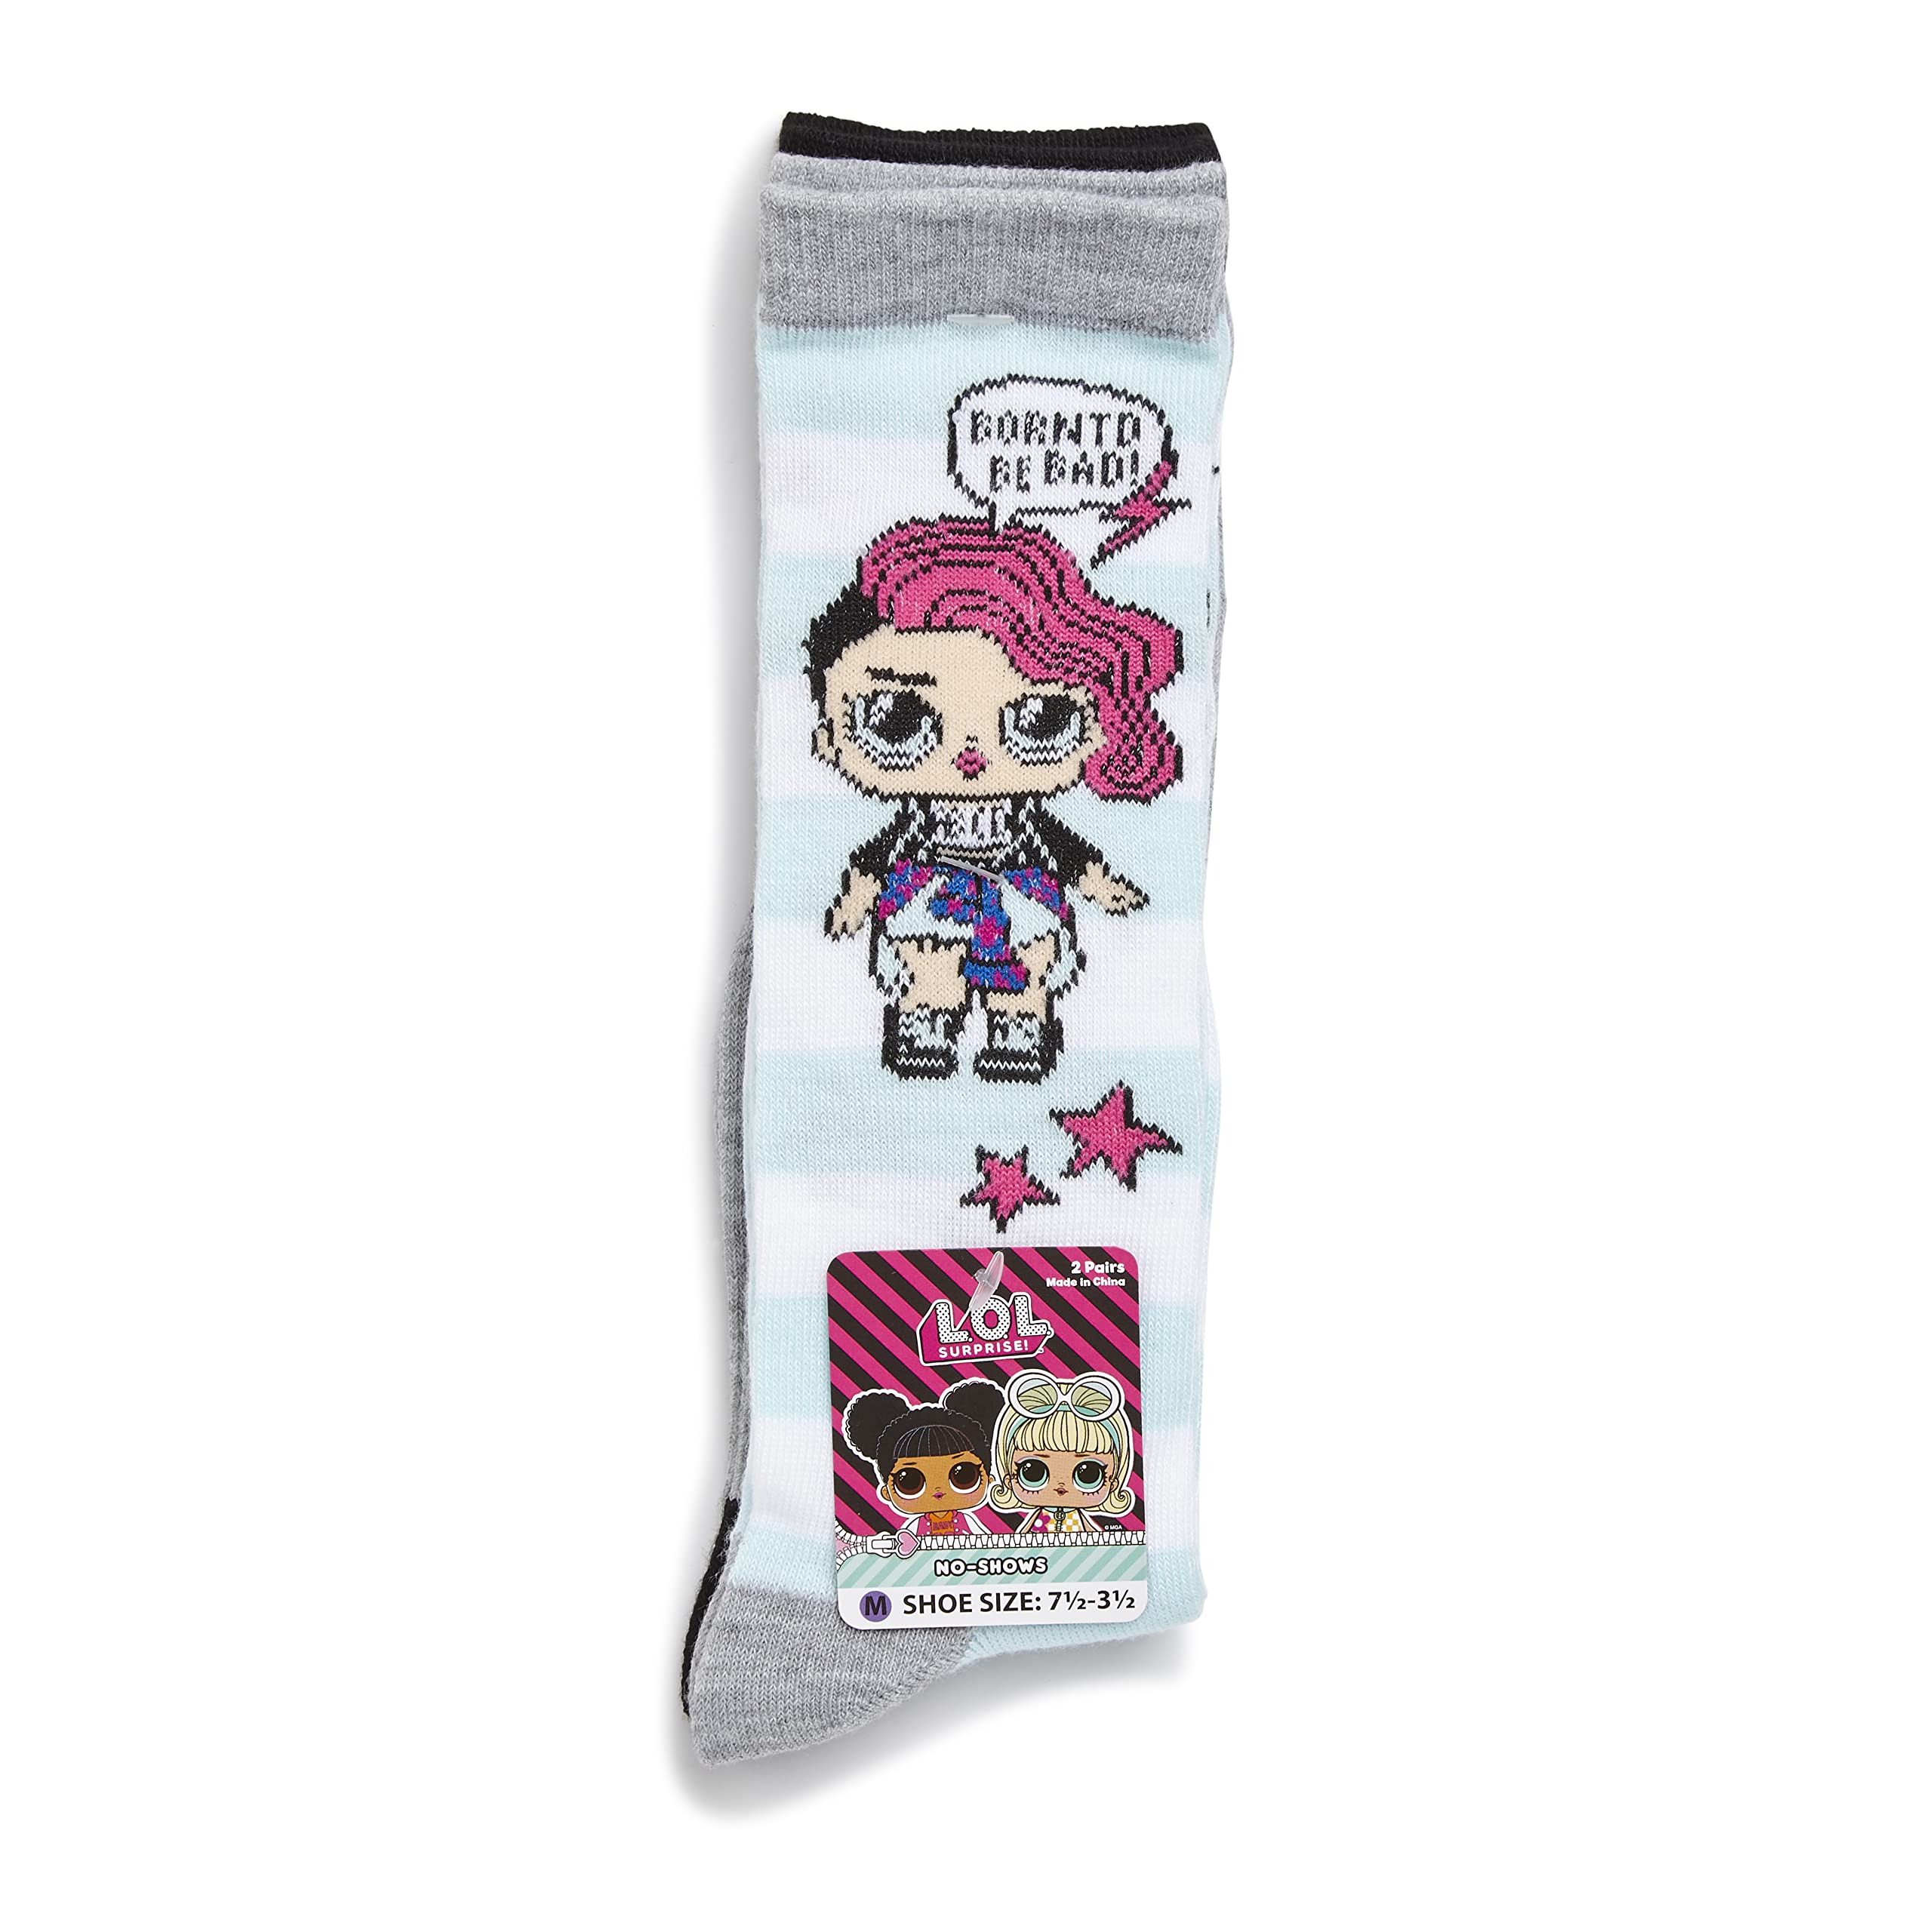 L.O.L. Surprise! girls Lol Surprise! 2 Pack Knee High Socks, Grey Stripe, Shoe Size 3-8 US